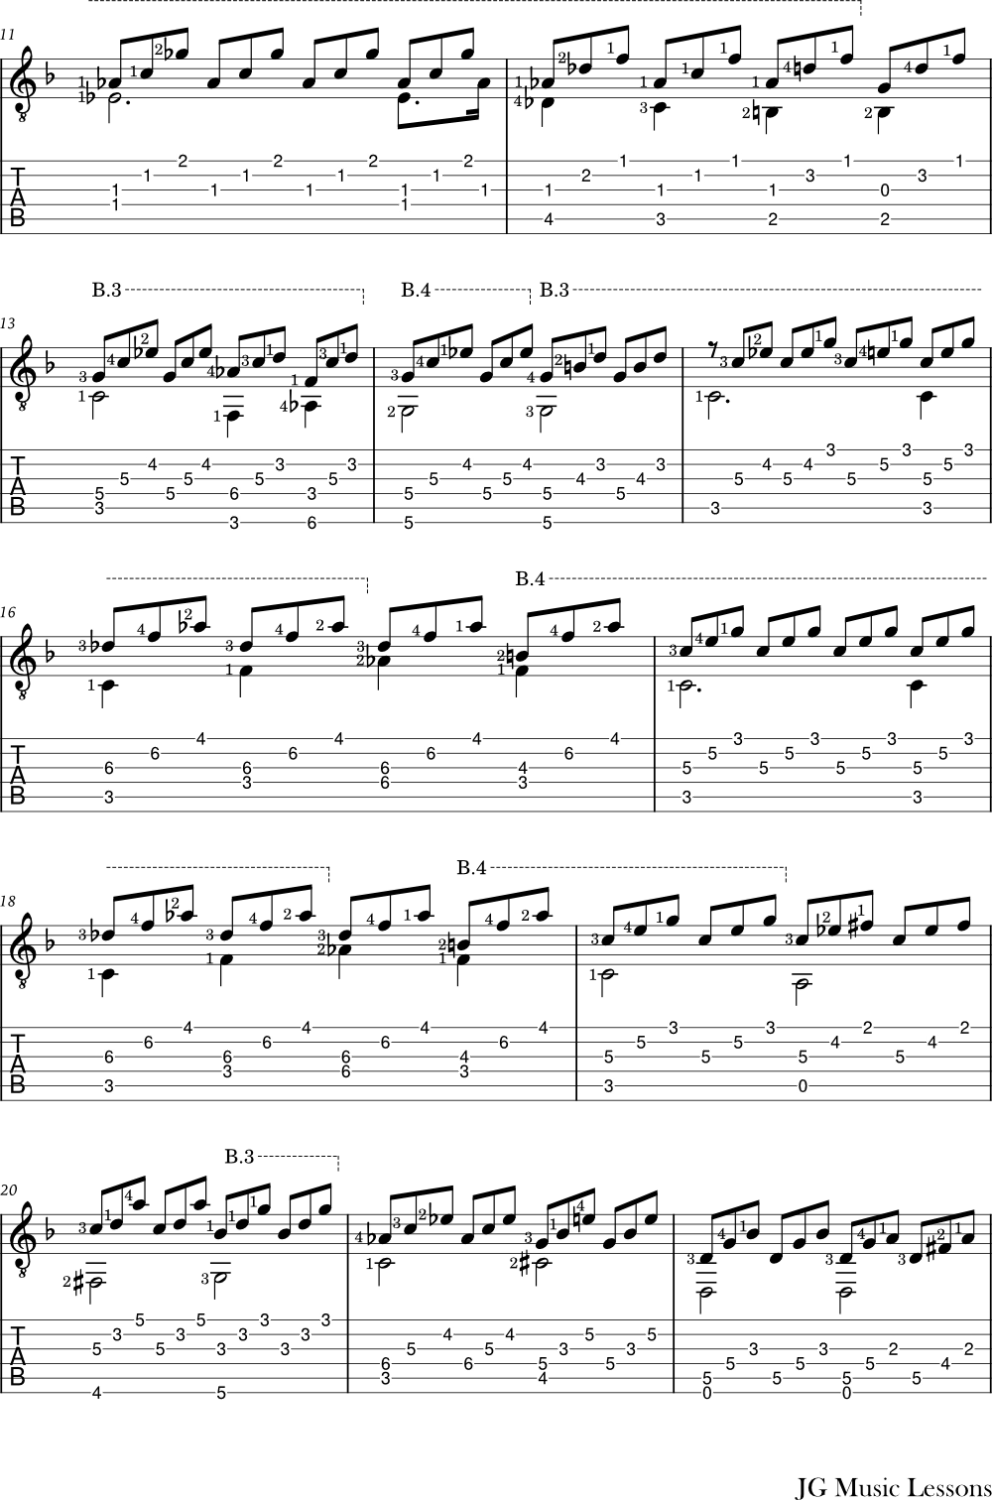 Moonlight Sonata guitar arrangement page 2